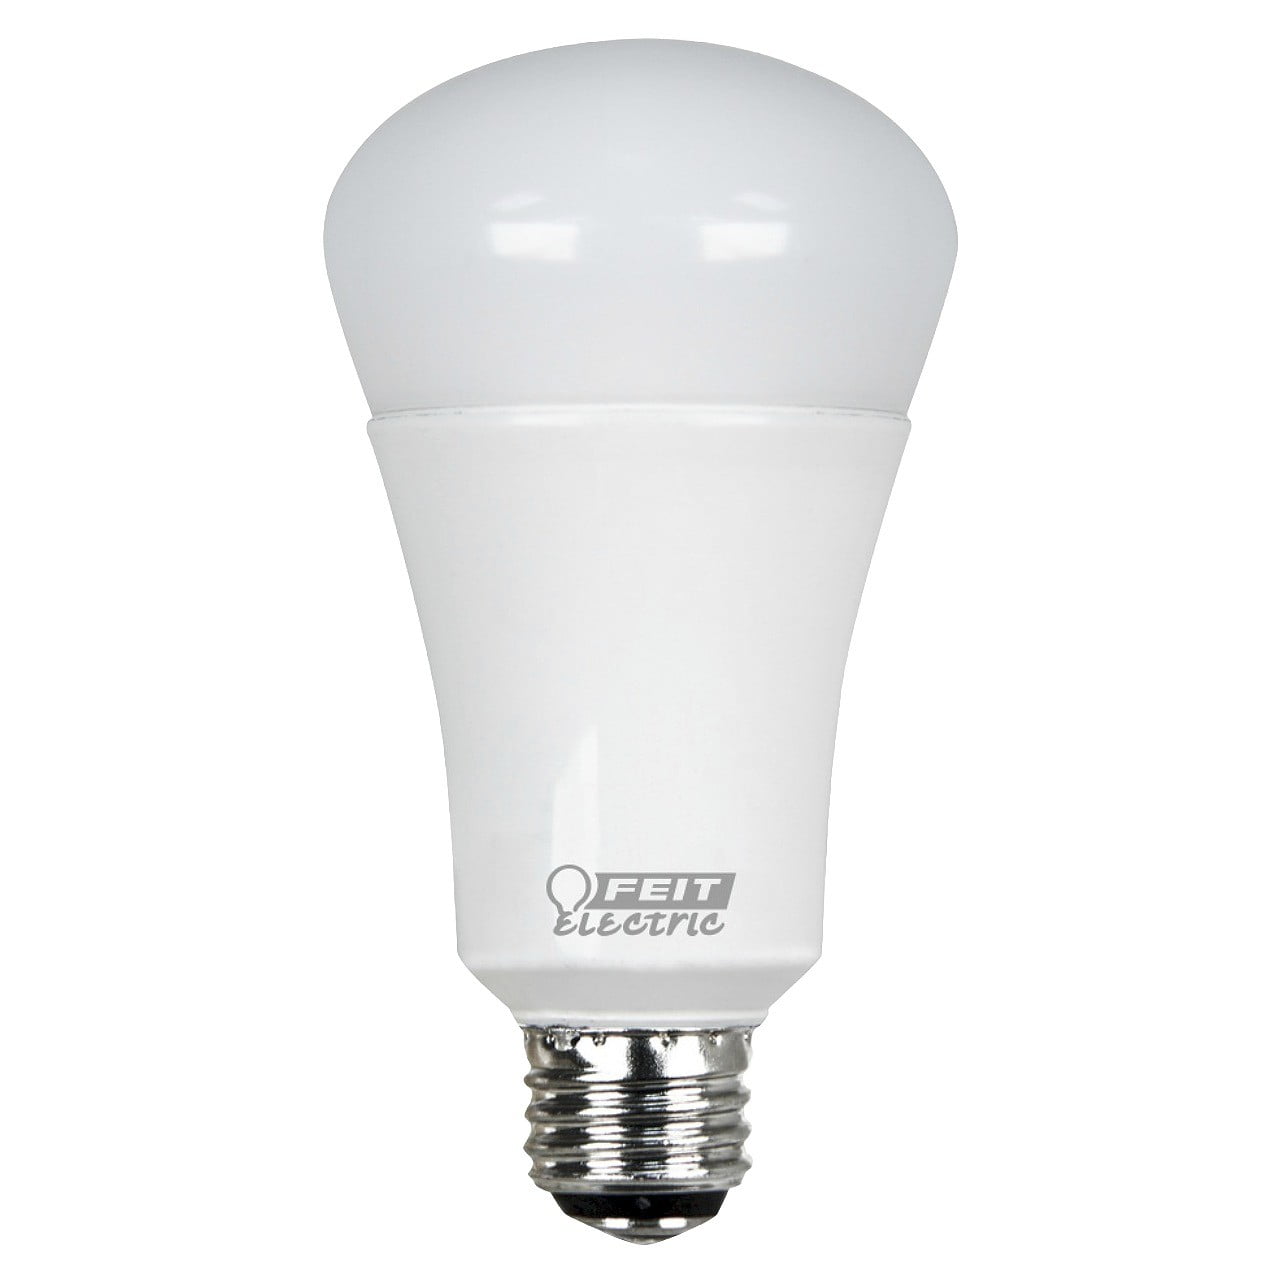 4x FEIT Electric A30 E26  LED Bulb Soft White 2700k 30/70/100 Watt Equivalence 